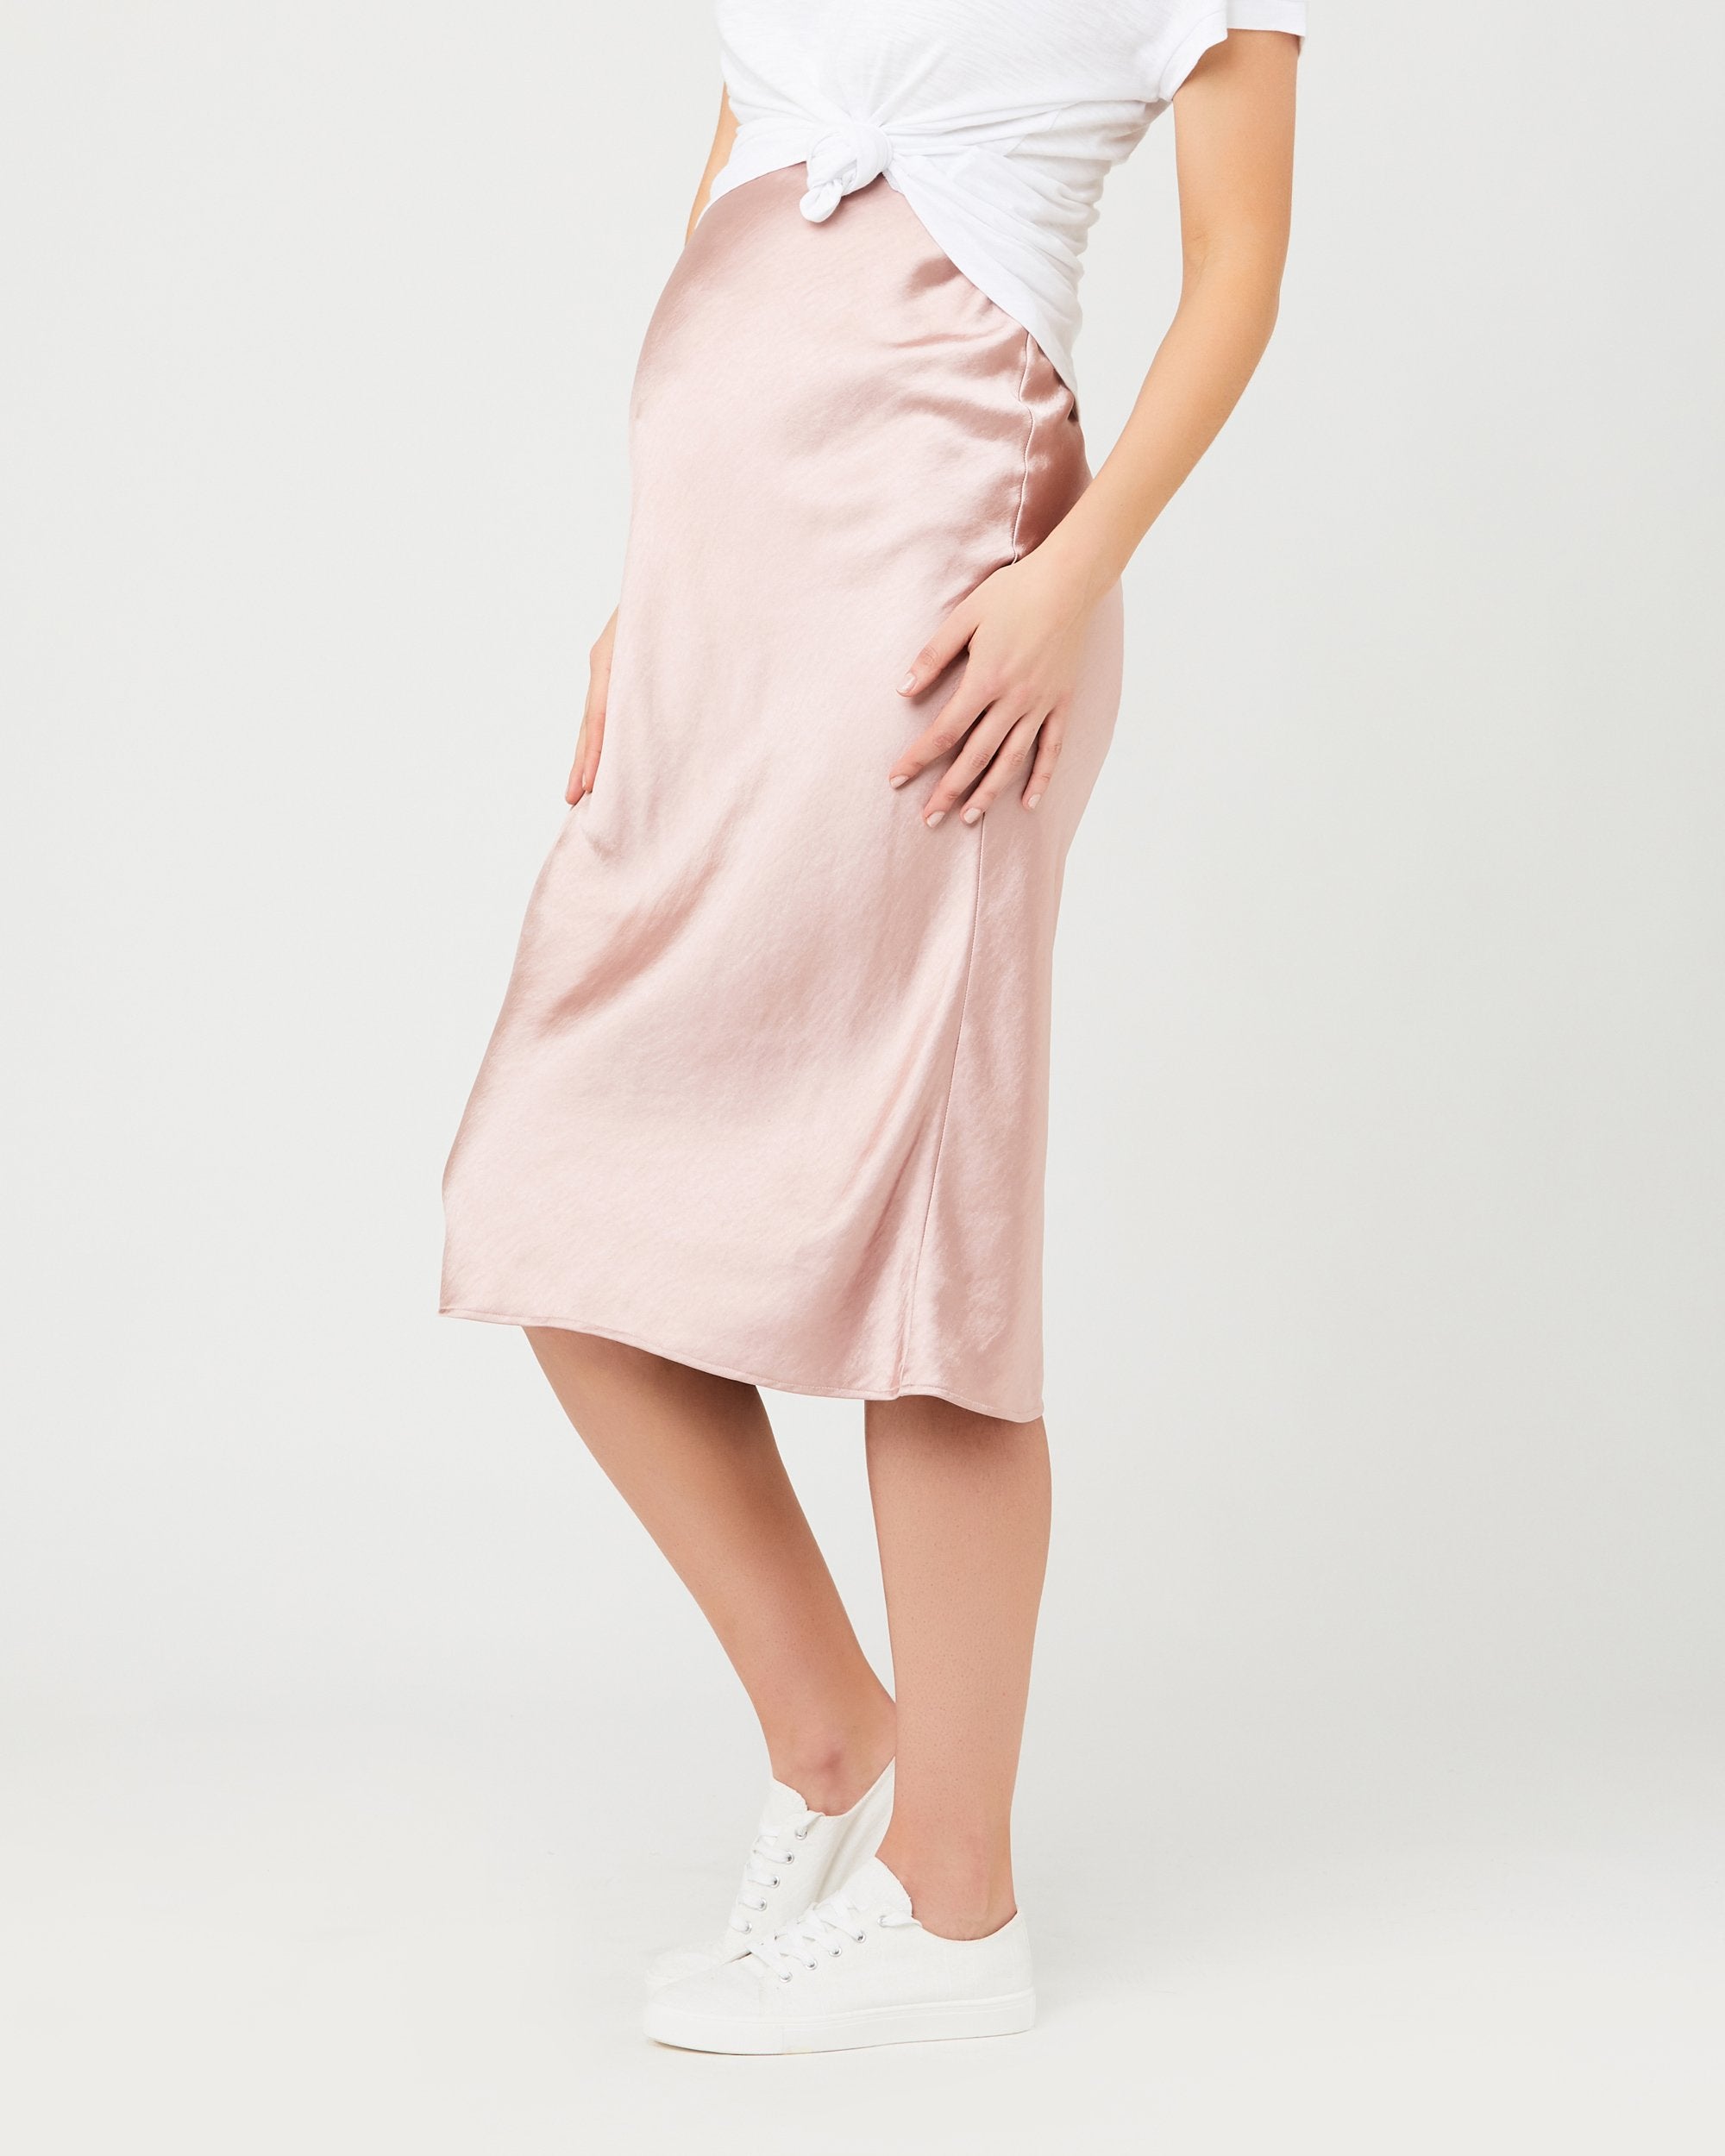 Styli Midi Skirts  Buy Styli Satin ALine Midi Skirt Online  Nykaa Fashion